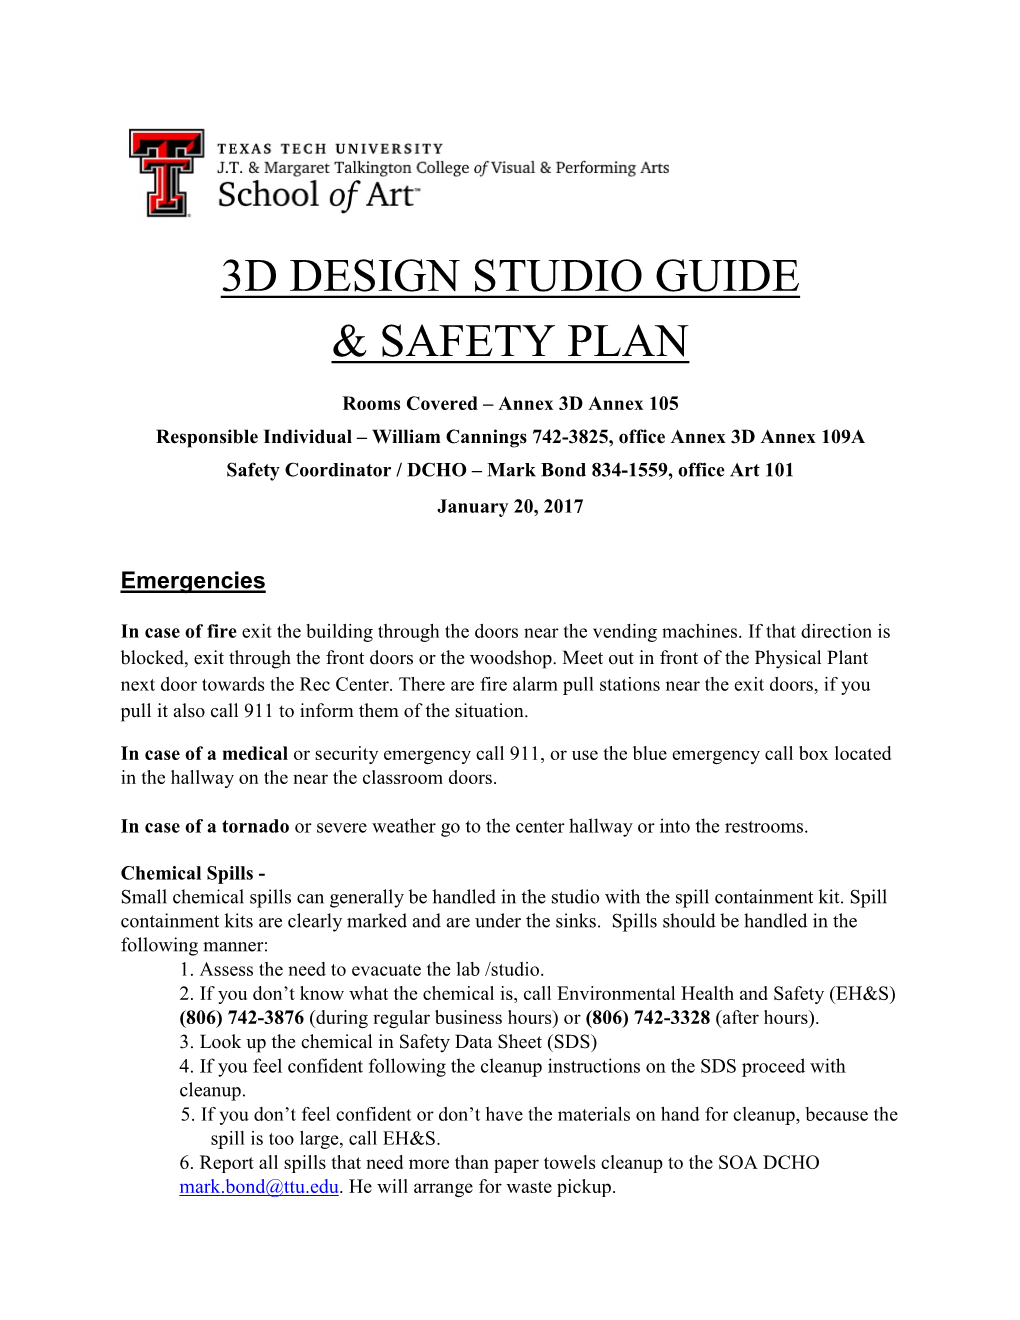 3D Design Studio Guide & Safety Plan